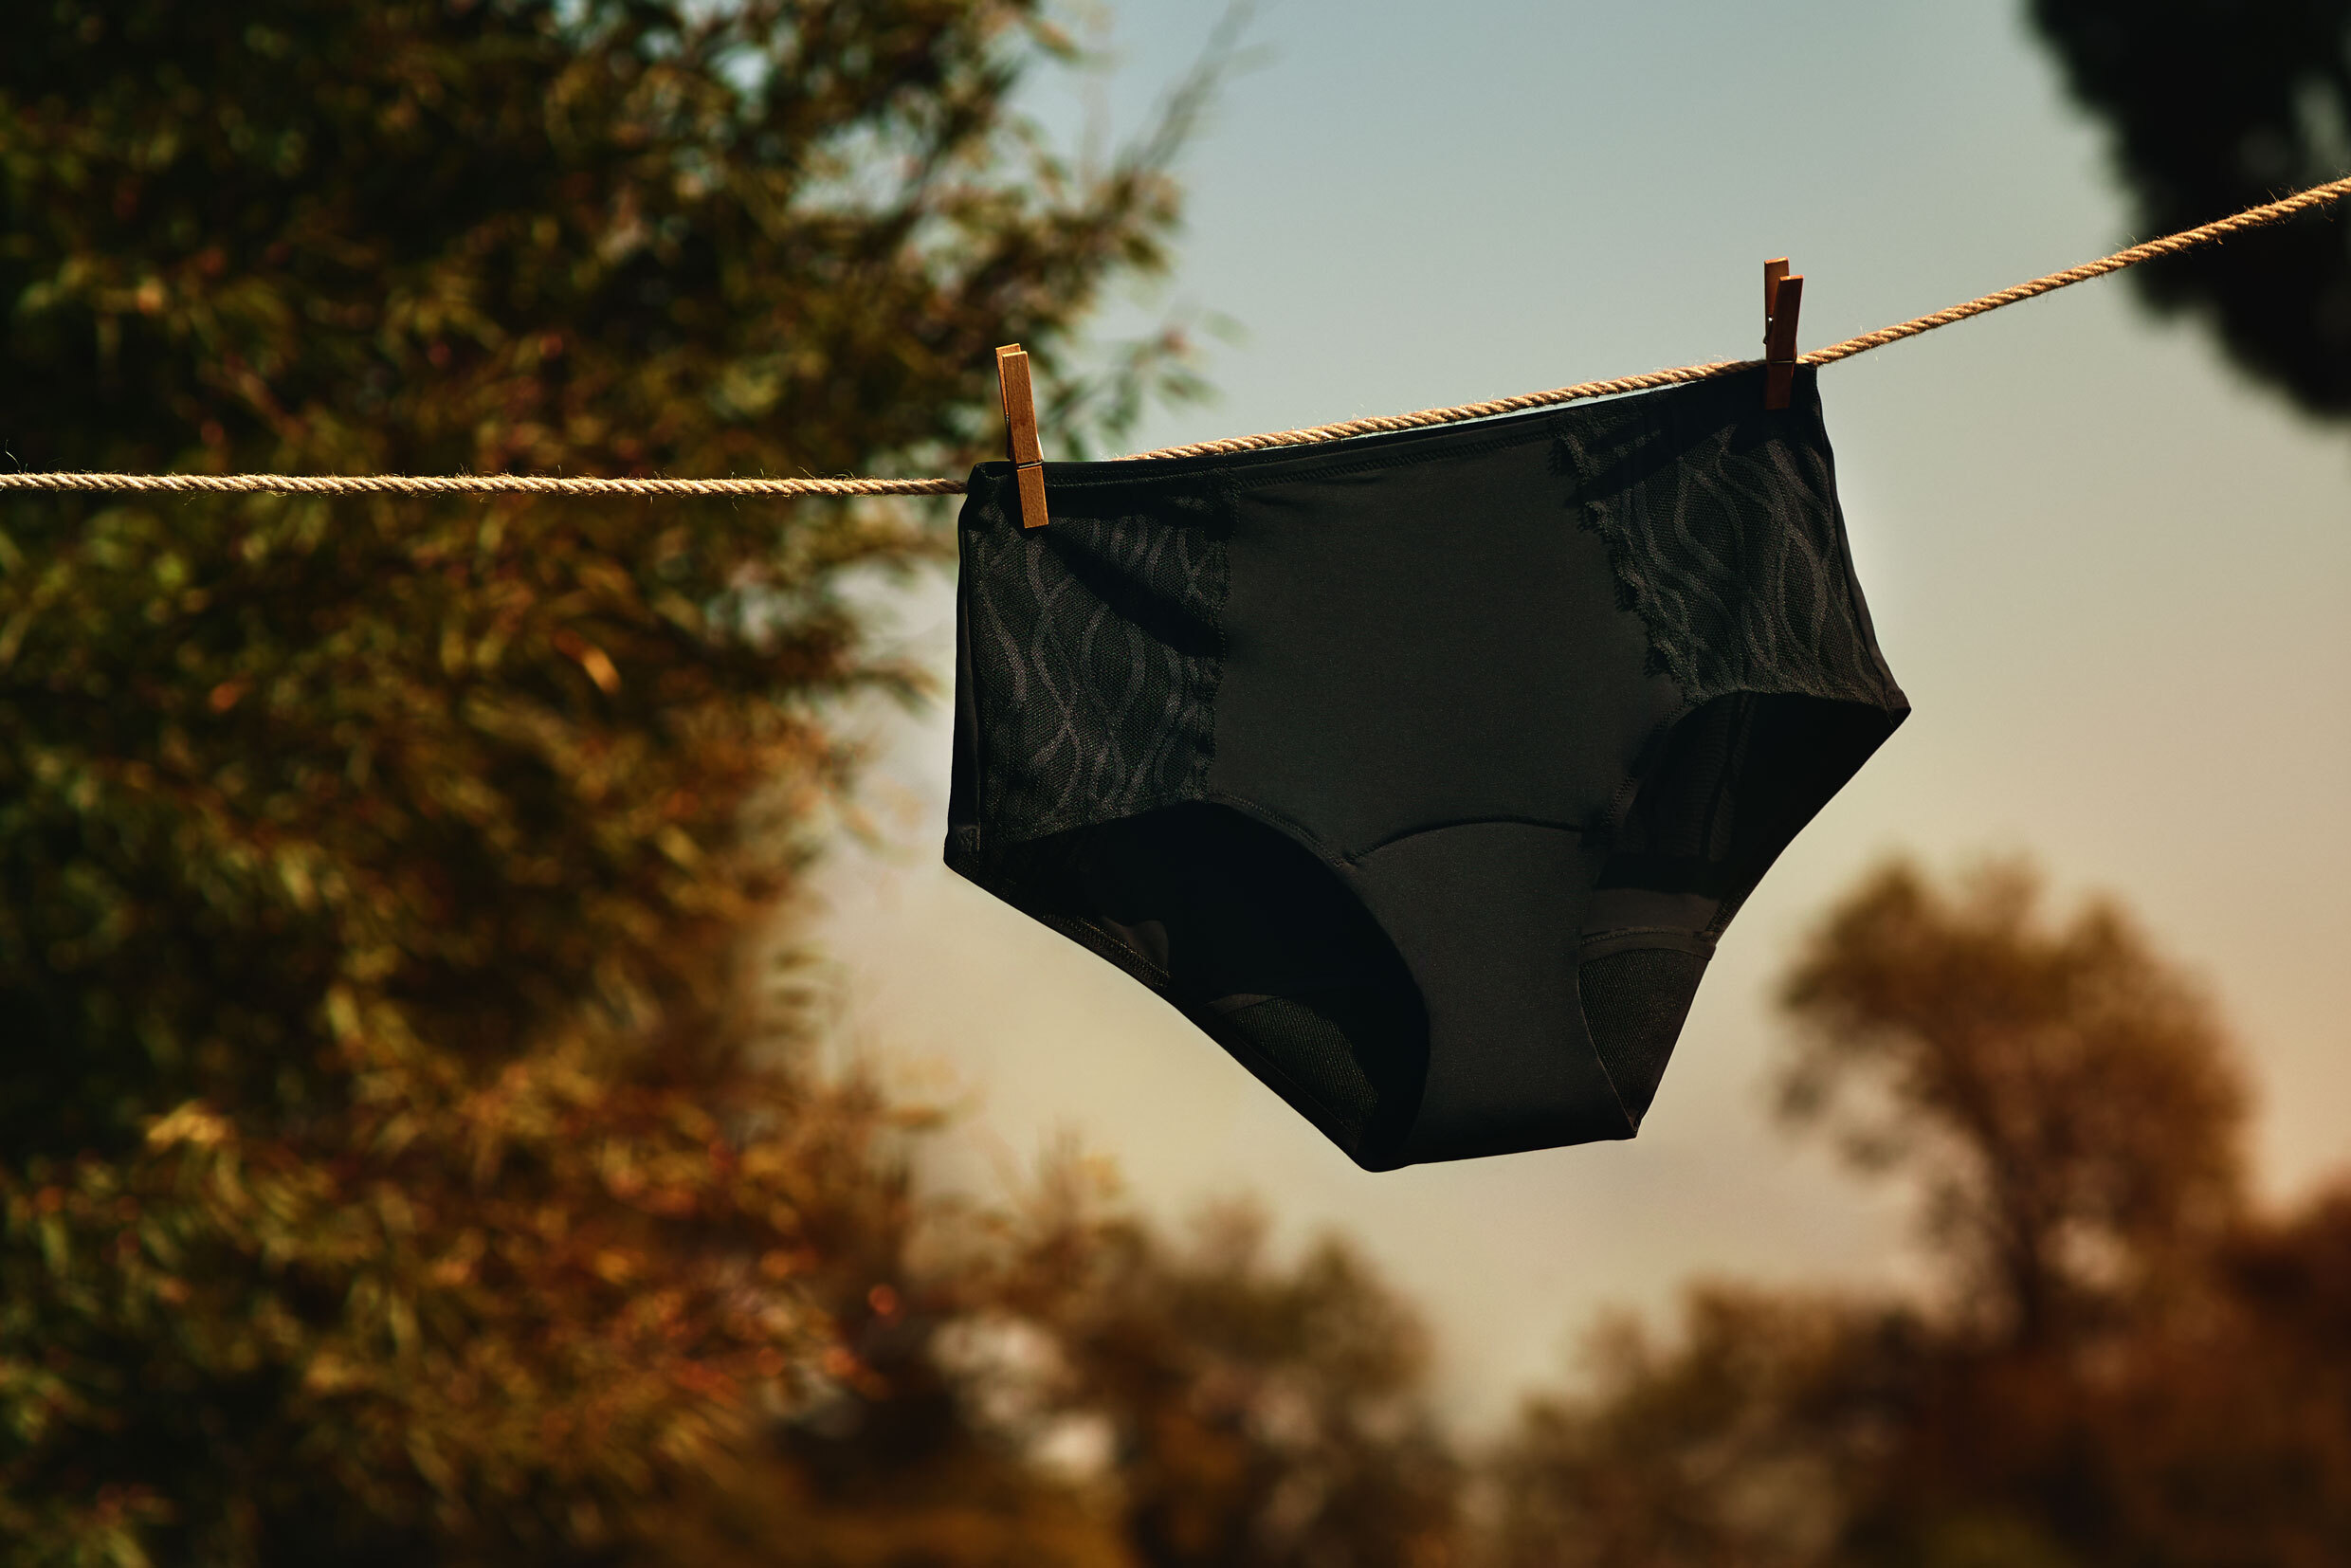 TENA Silhouette Washable Underwear: a roupa interior para a